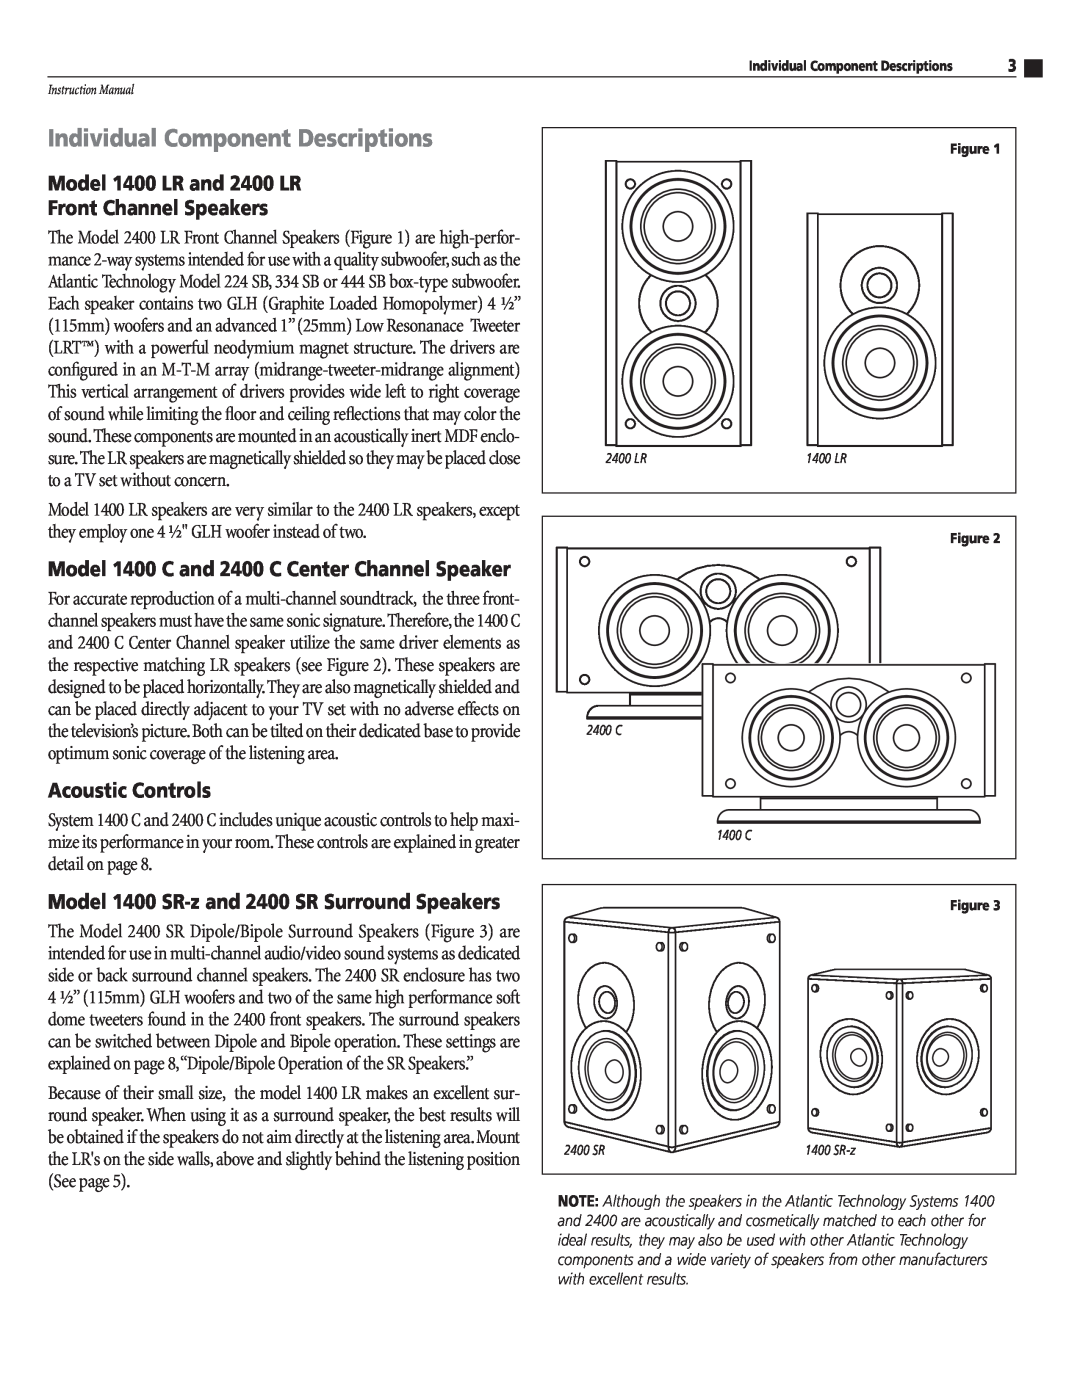 Atlantic Technology Individual Component Descriptions, Model 1400 LR and 2400 LR Front Channel Speakers 